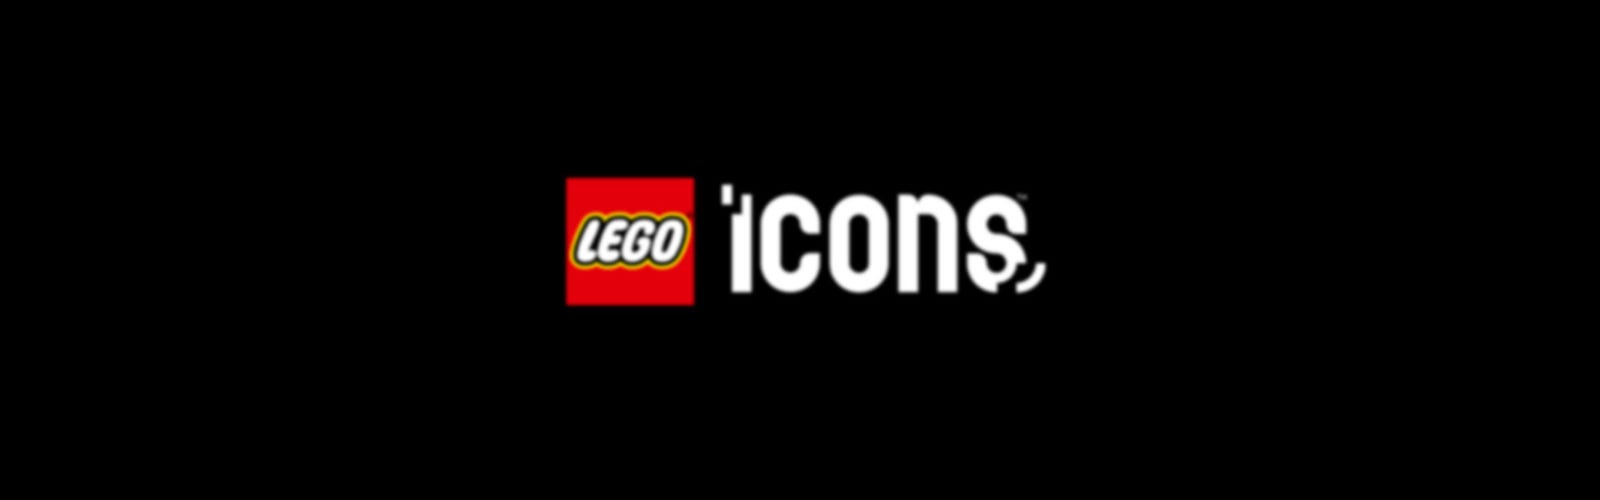 Le jardin paisible 10315, LEGO® Icons